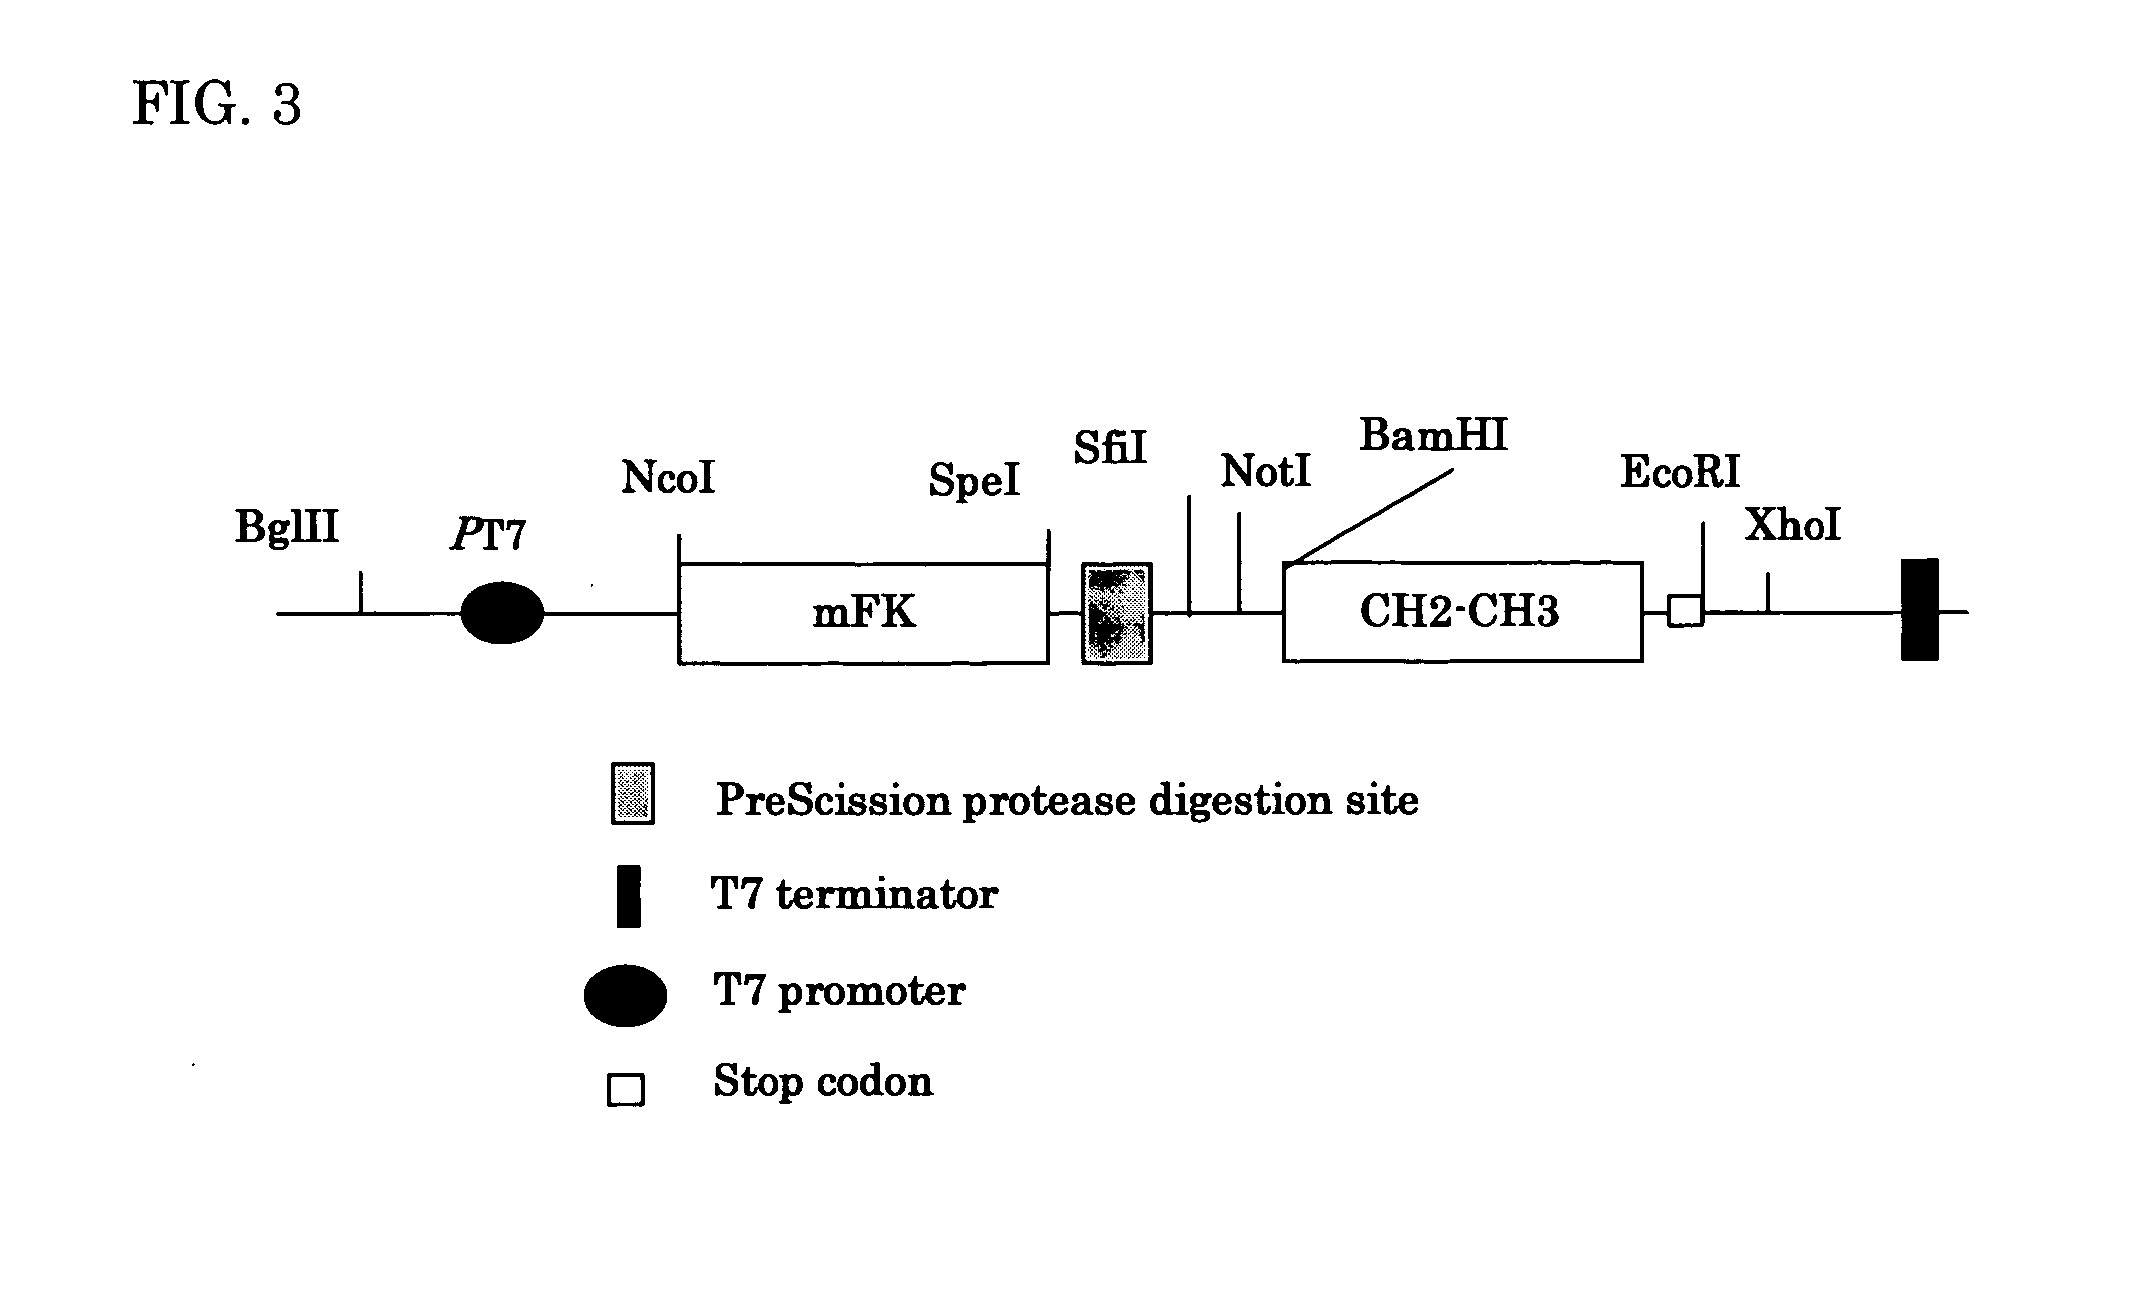 Methods for producing recombinant polyclonal immunoglobulins